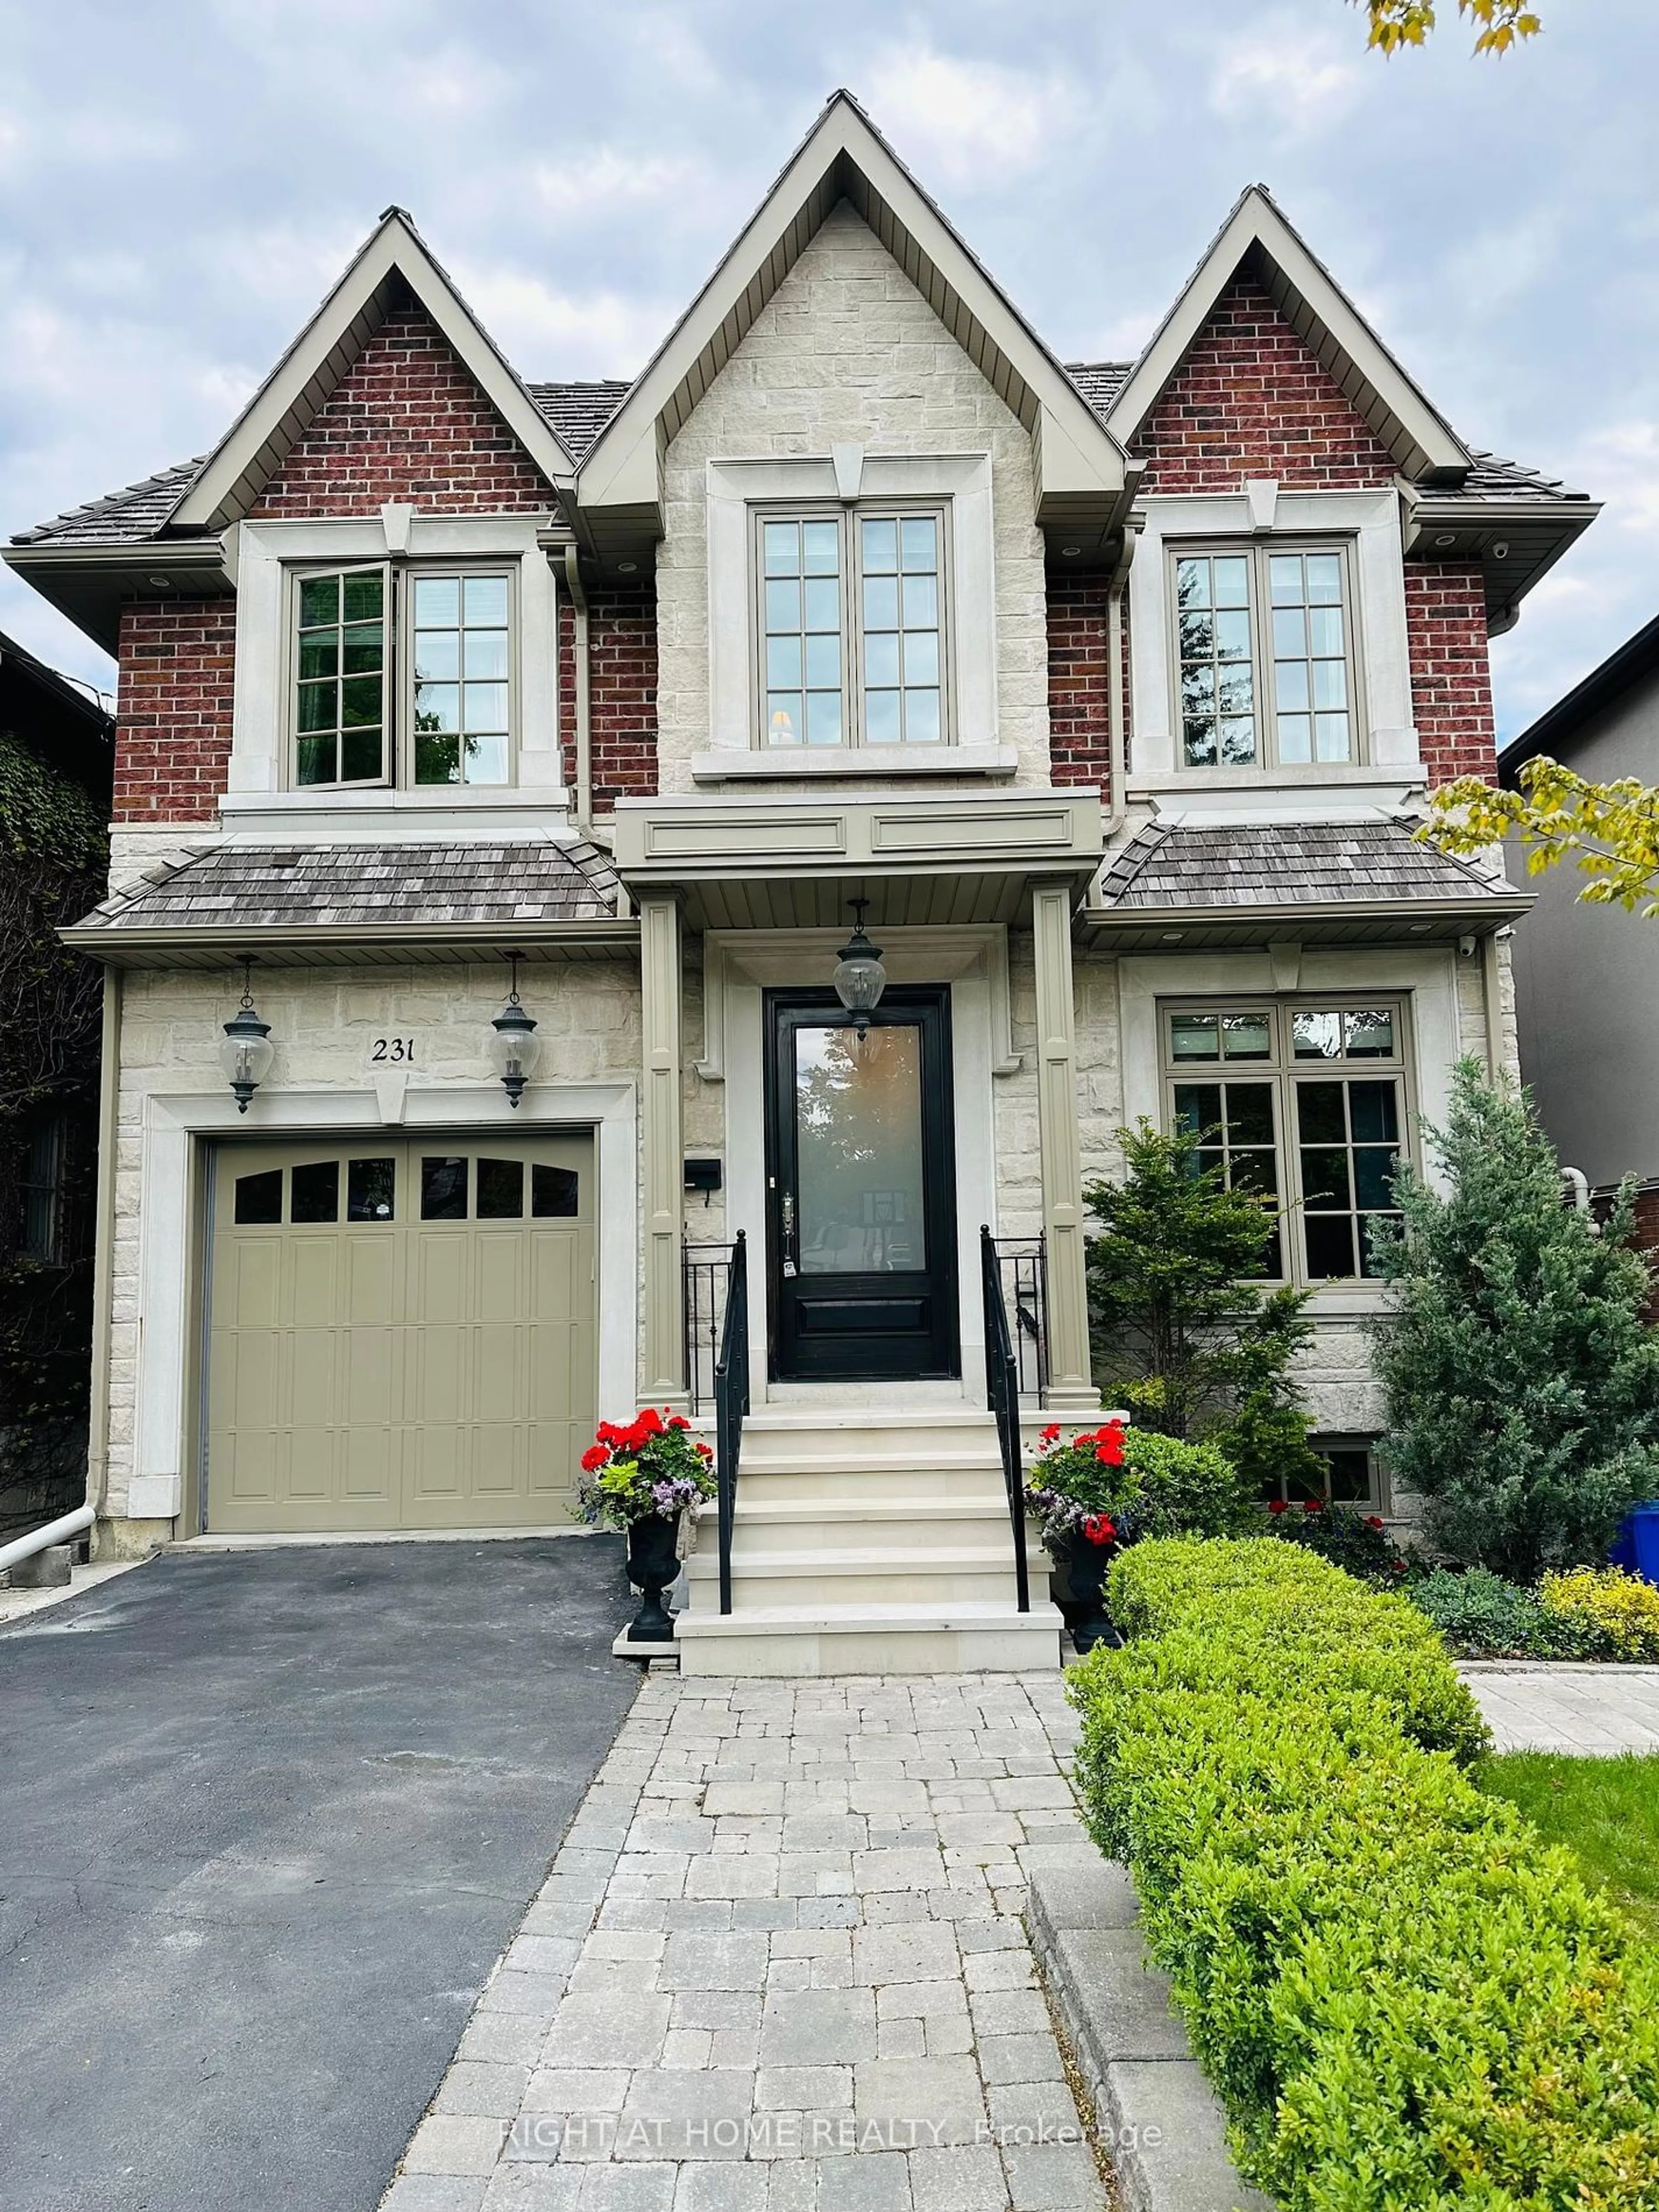 Home with brick exterior material for 231 Hanna Rd, Toronto Ontario M4G 3P3